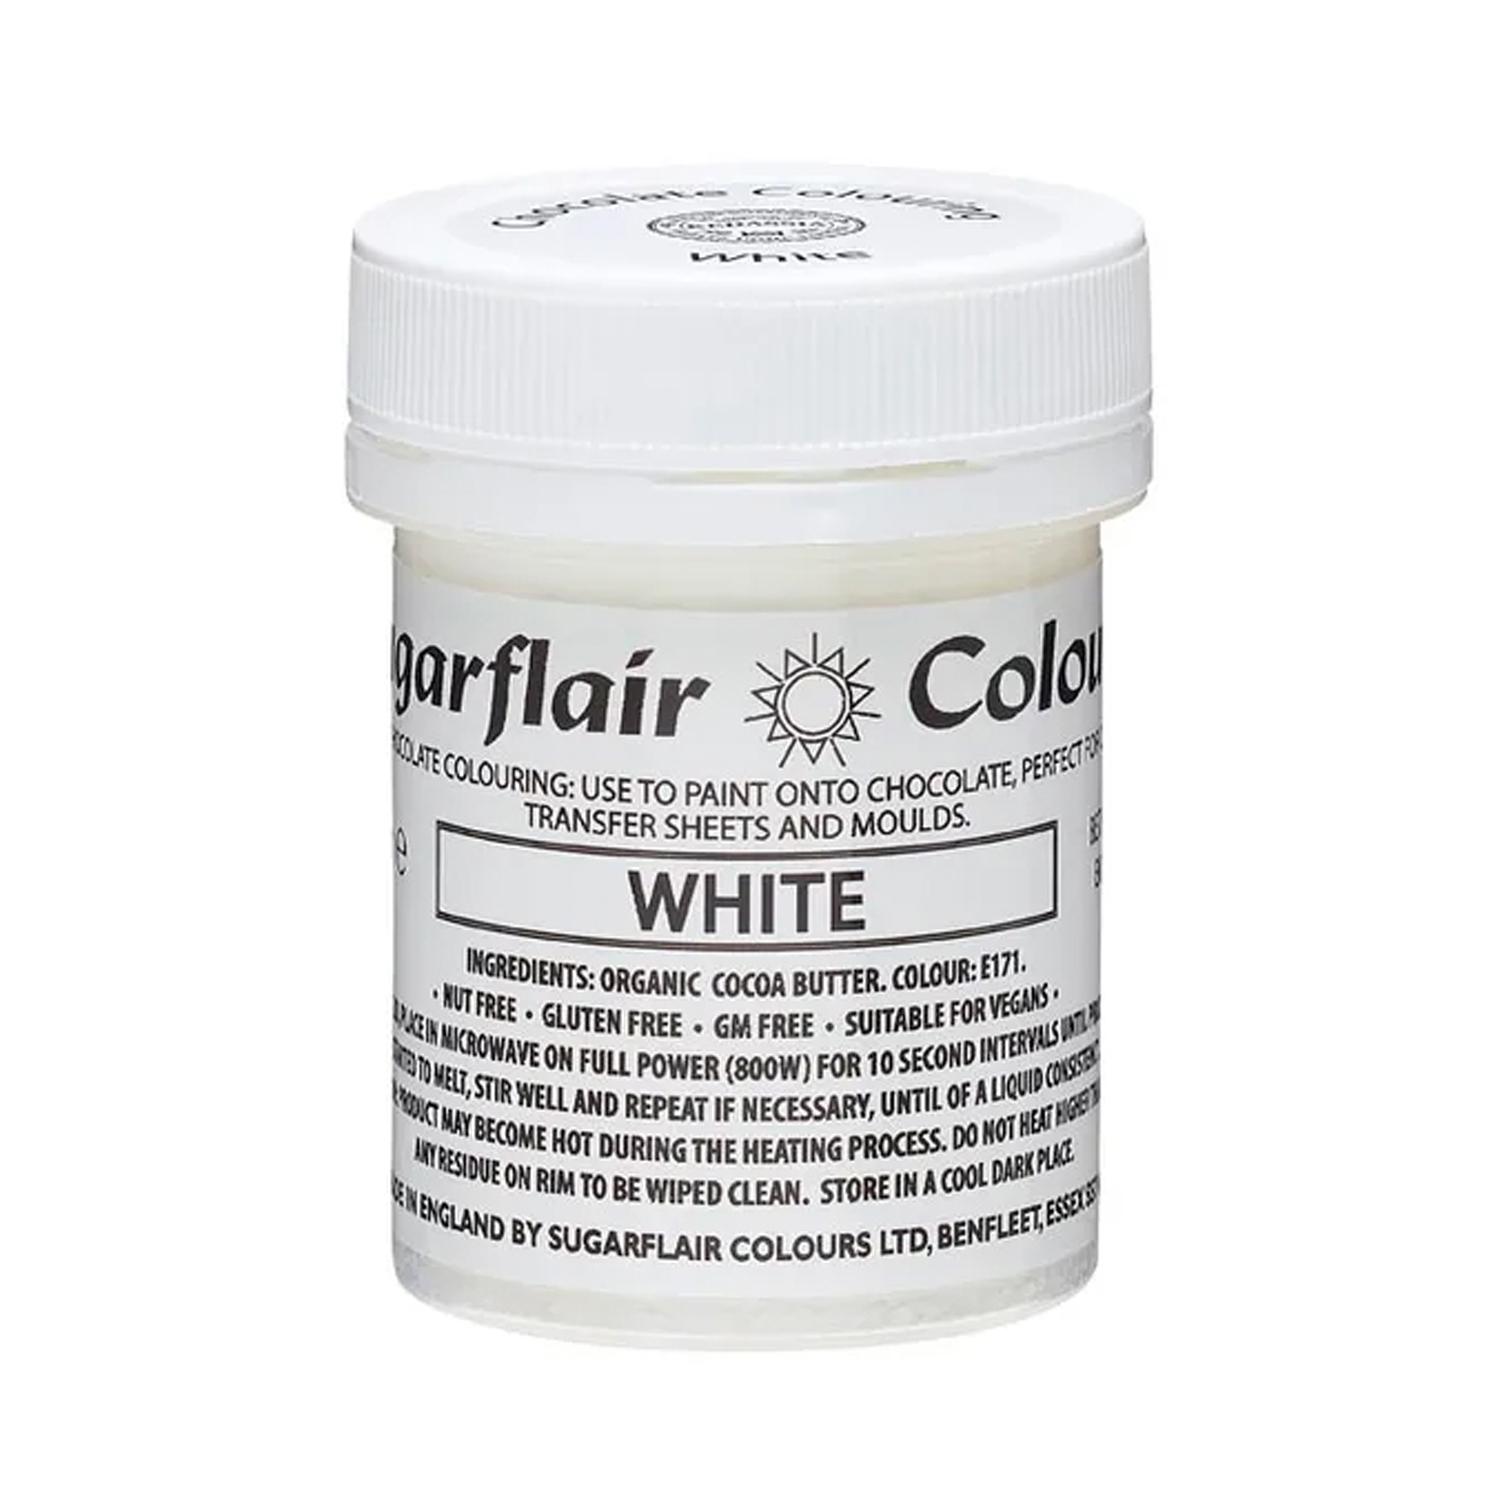 SUGARFLAIR PEARL WHITE CHOCOLATE PAINT 35GMS